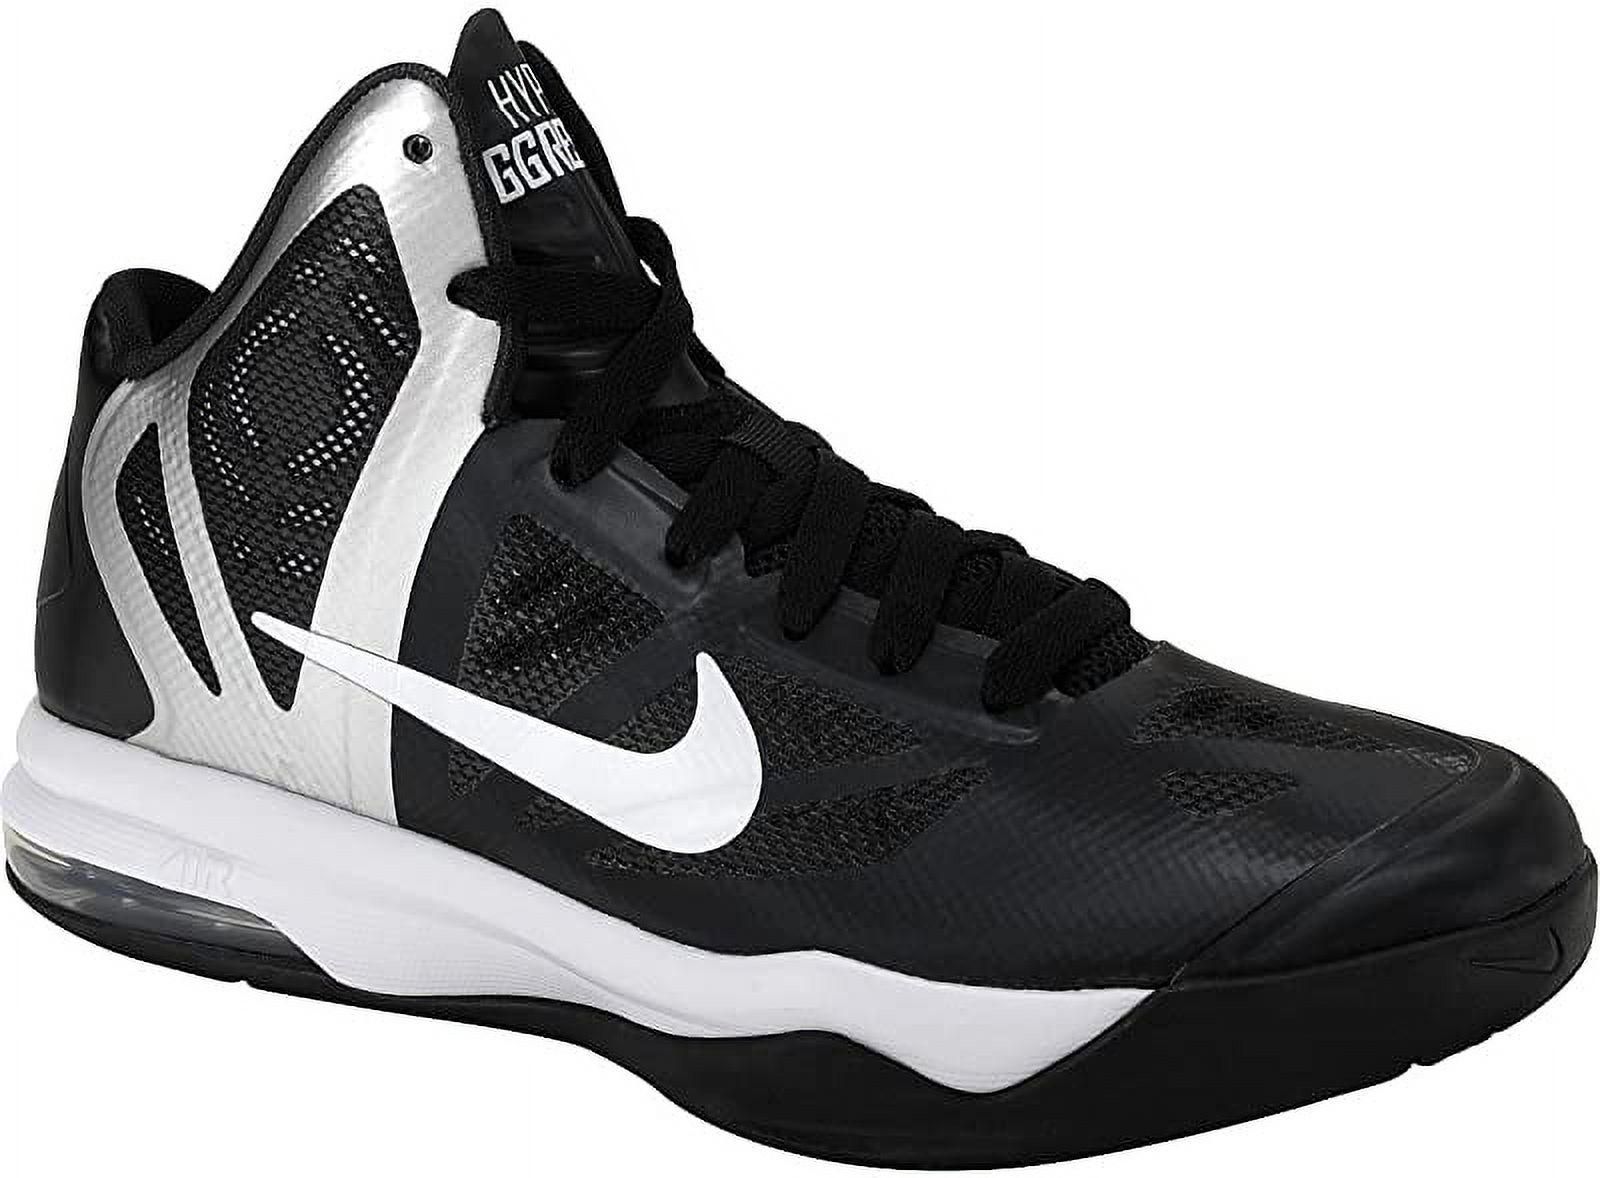 Nike Women's Air Max Hyperaggressor Basketball Shoe, Black/Silver, 5.5 B(M) US - image 1 of 1